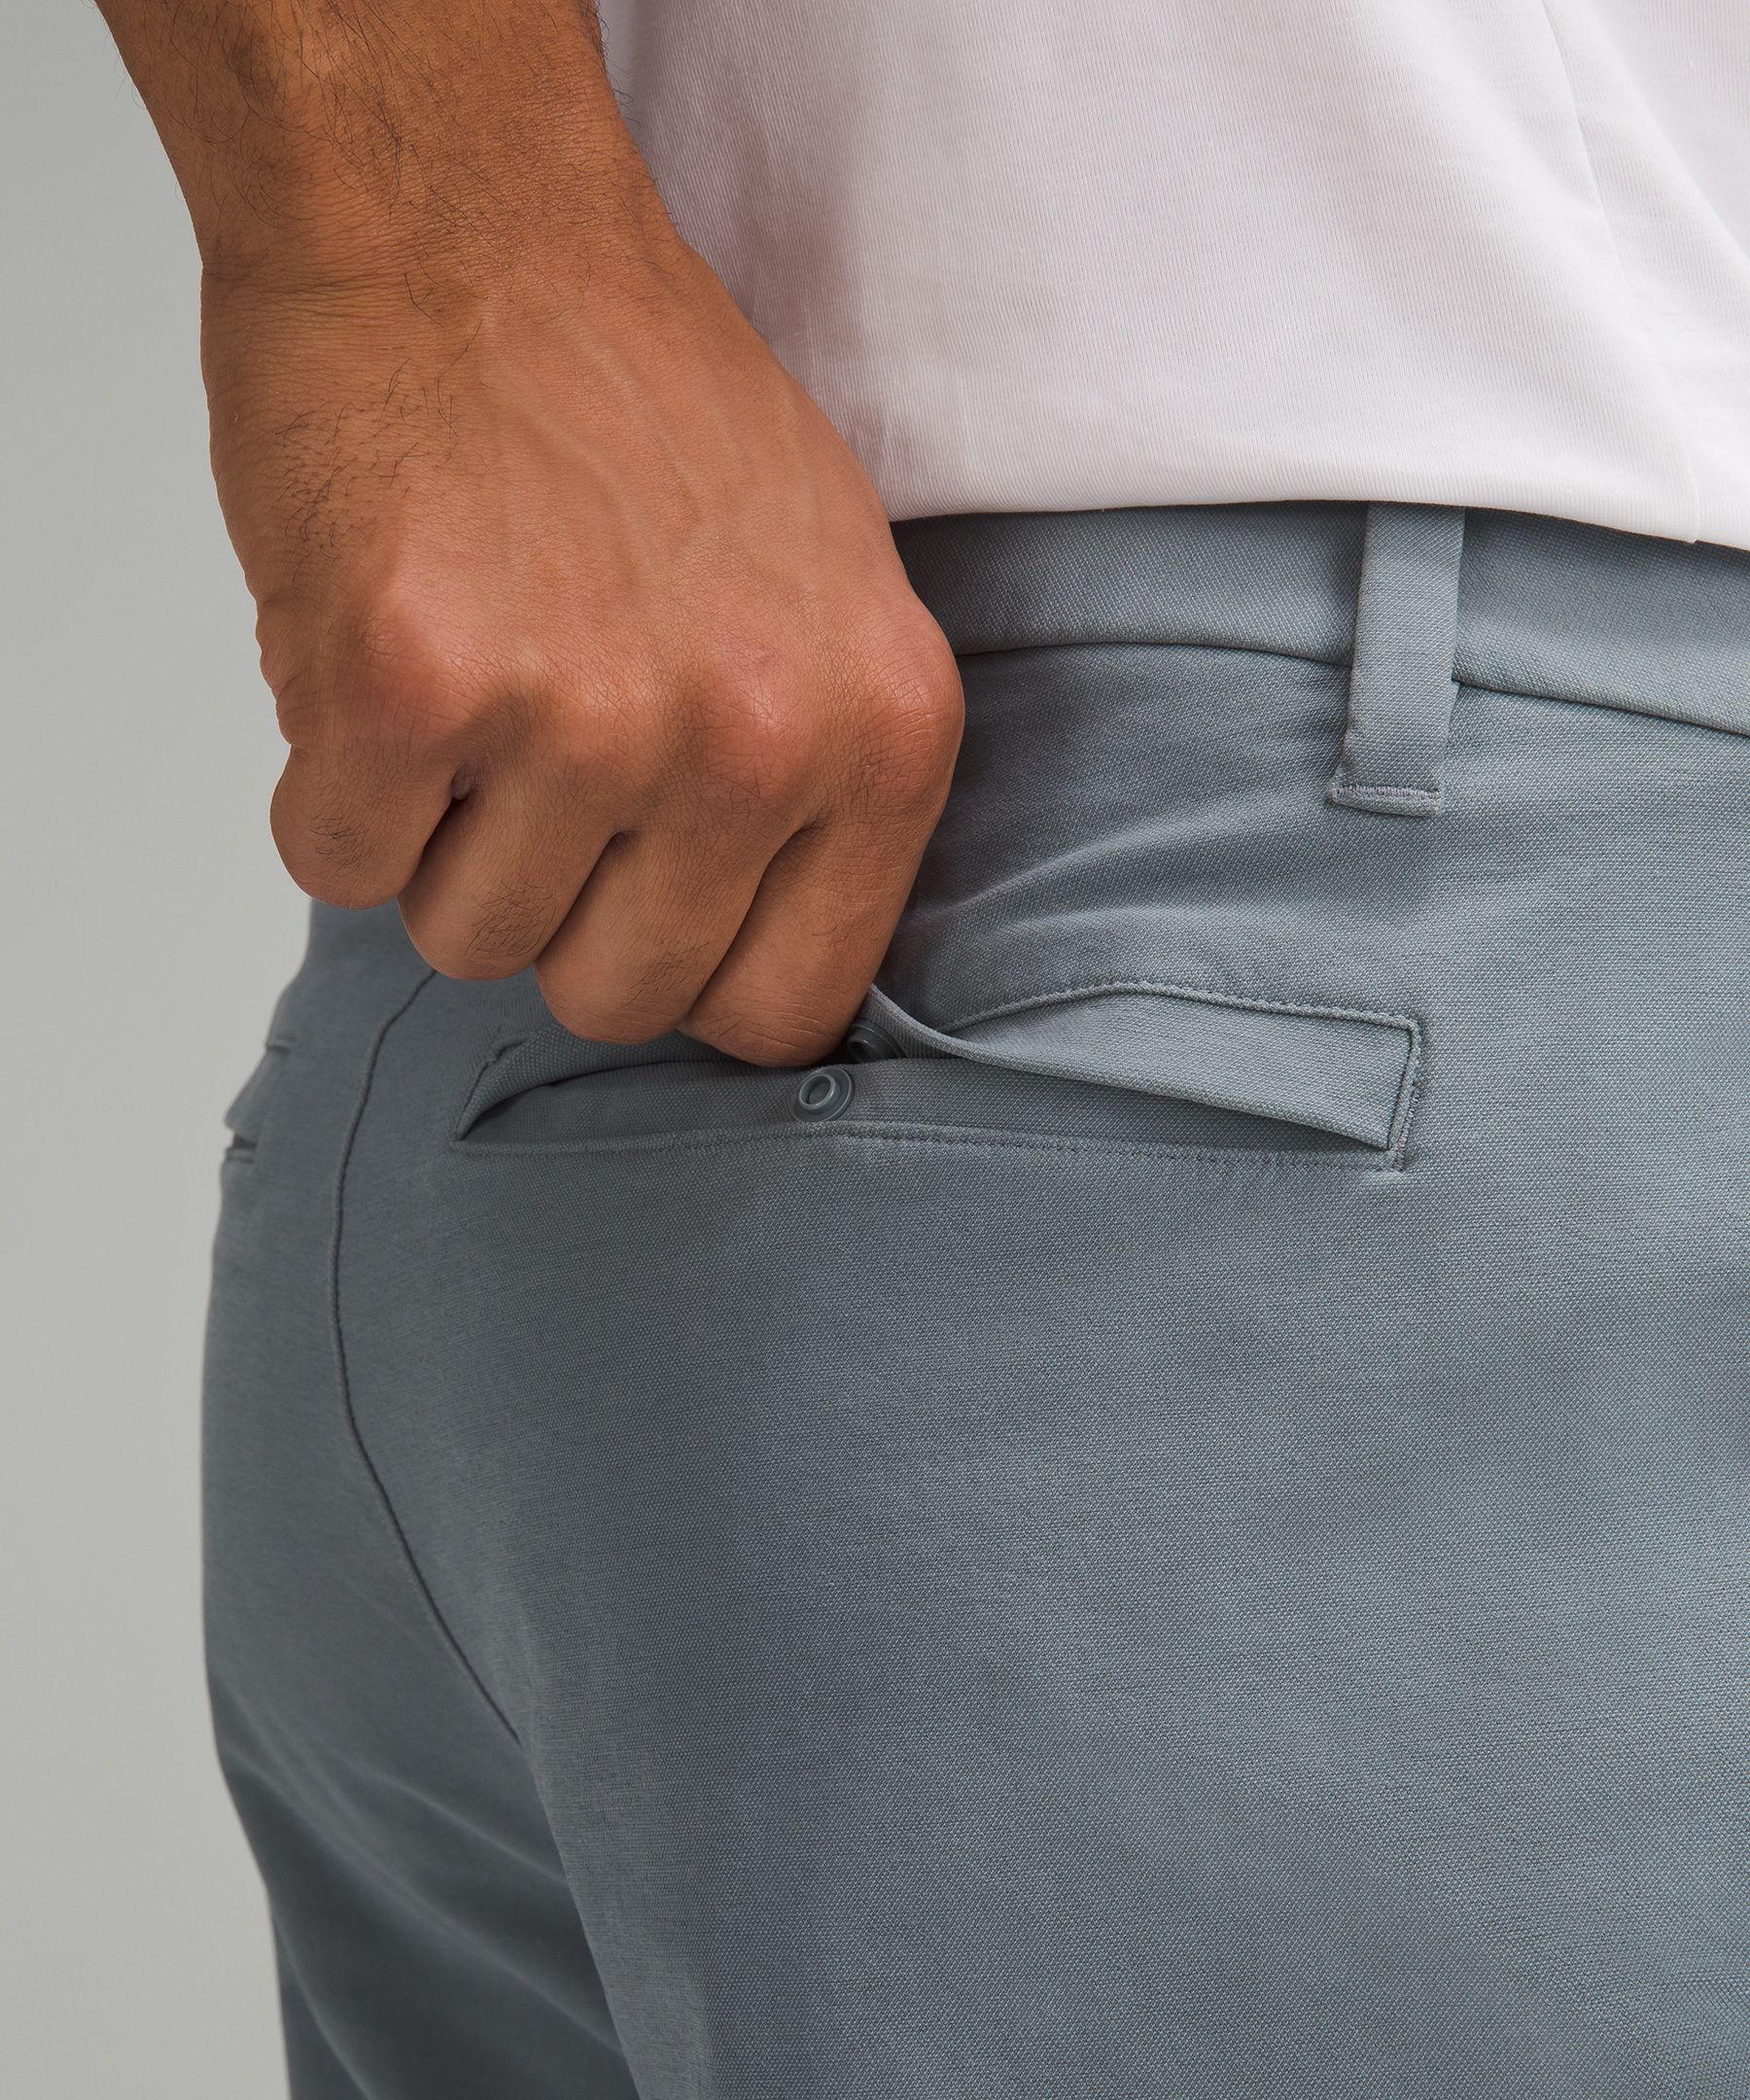 ABC Classic-Fit Trouser 34L *Stretch Cotton VersaTwill